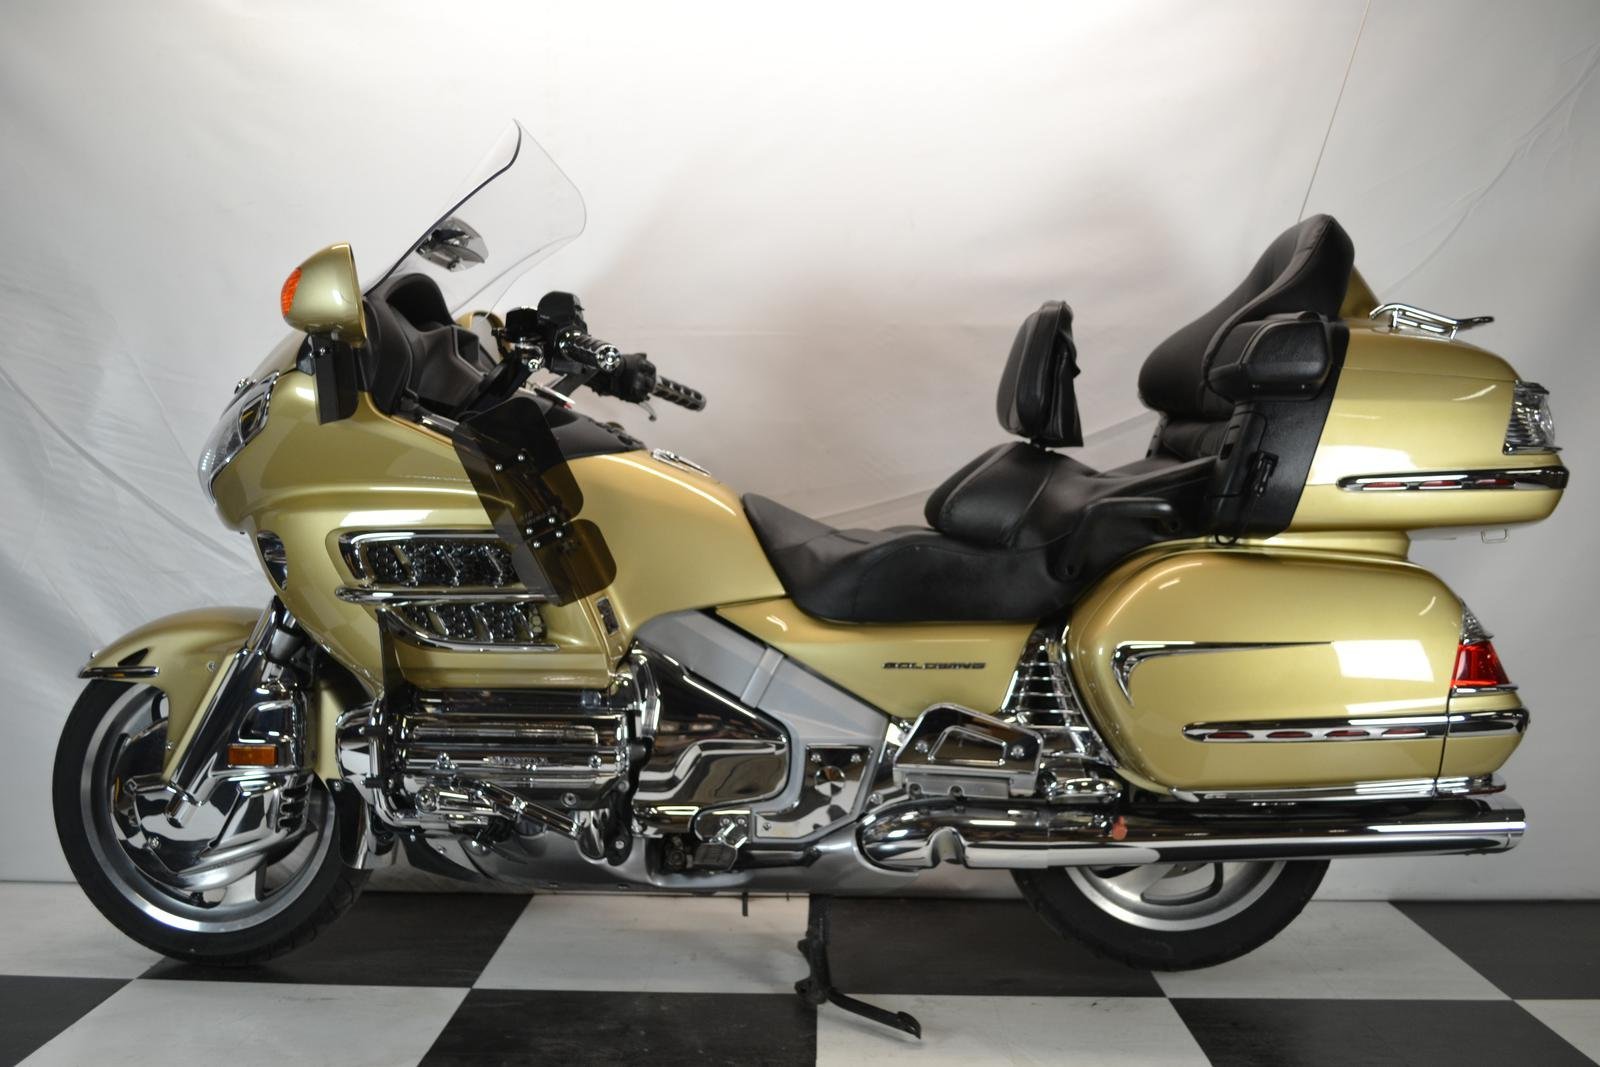 Мотоцикл honda gold wing